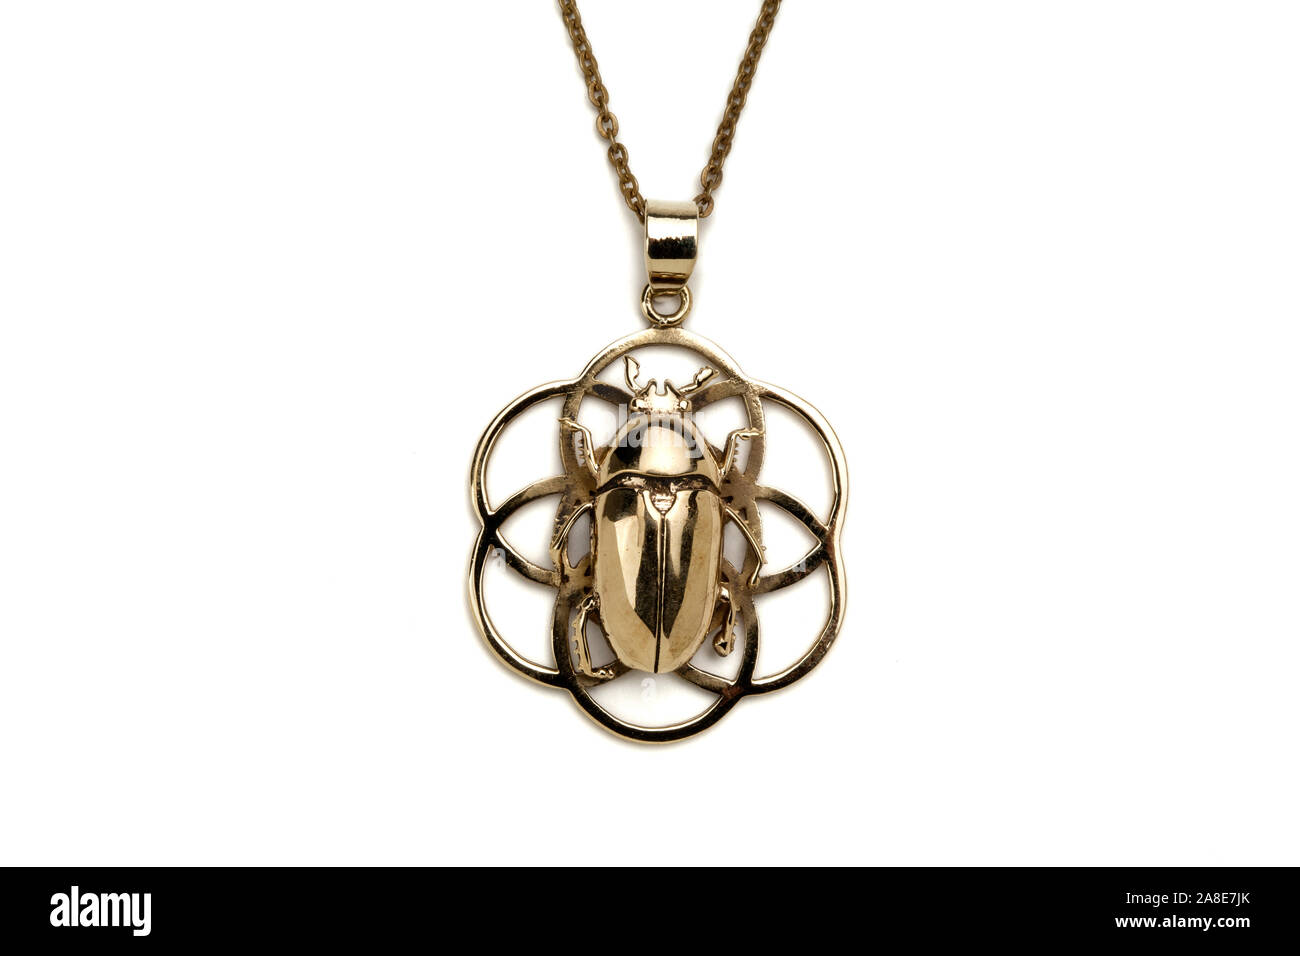 Brass June beetle necklace pendant. Stock Photo